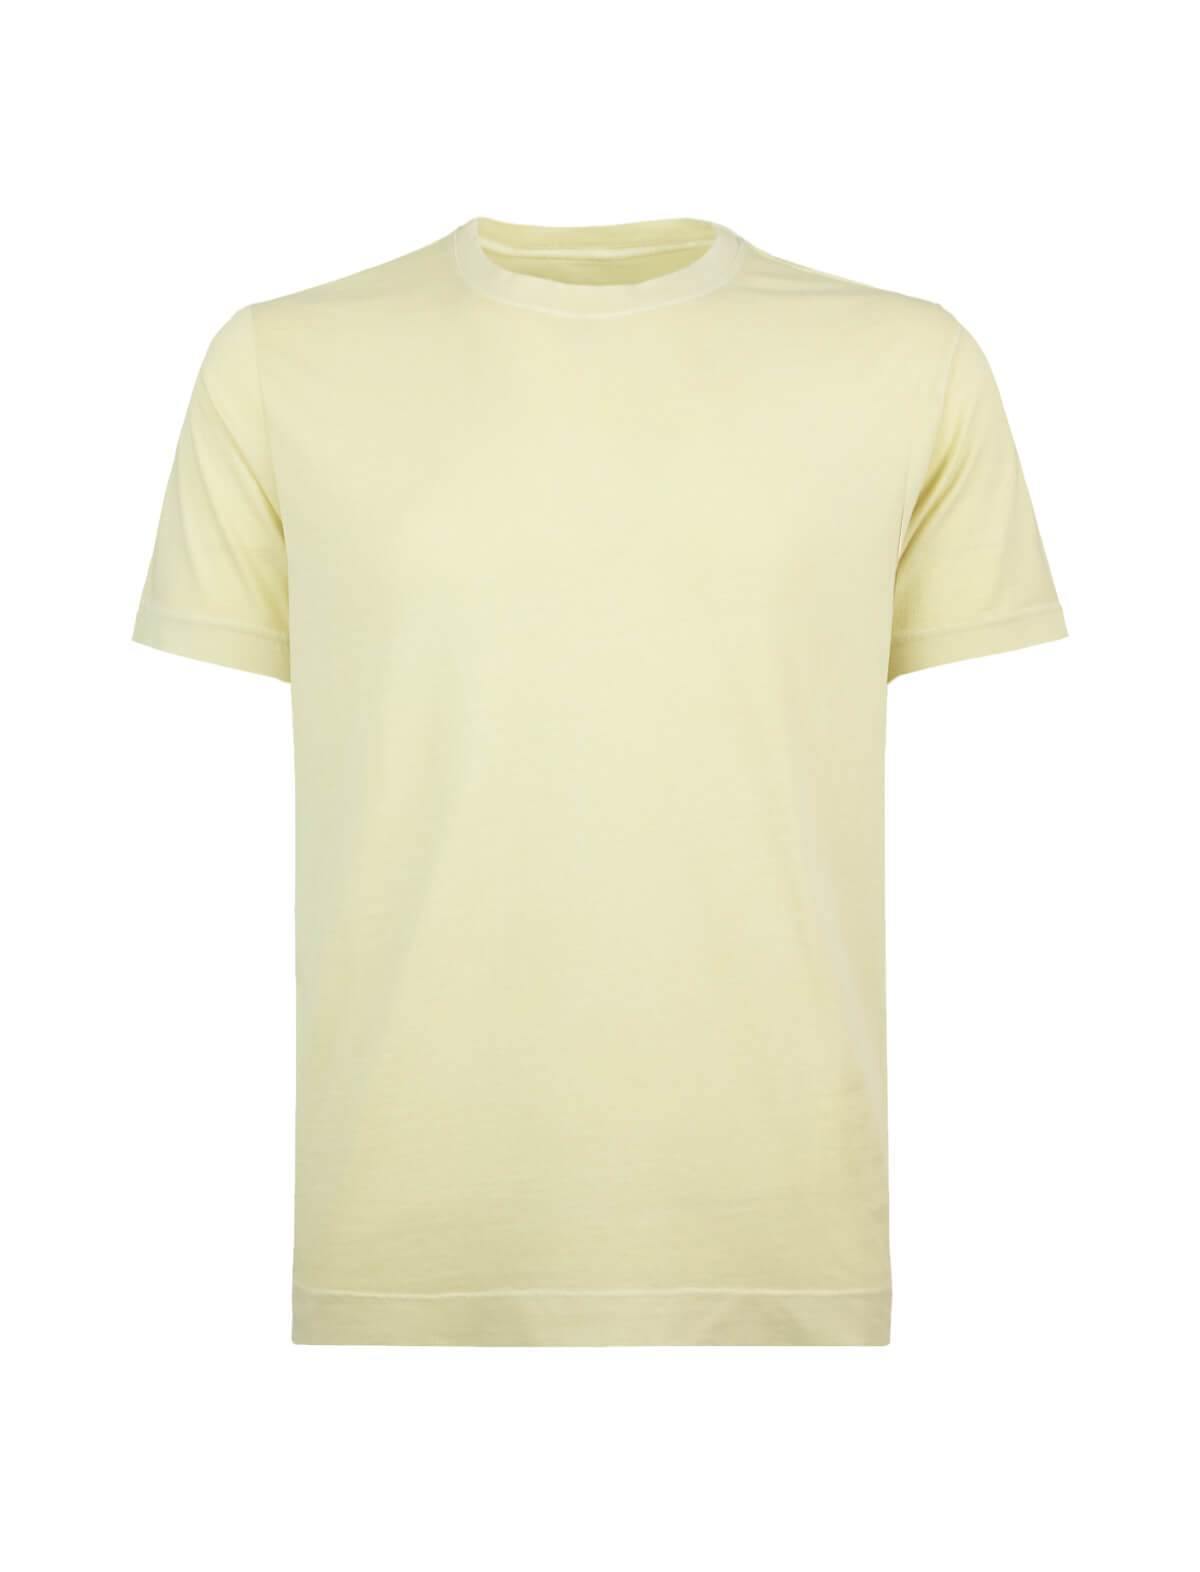 CIRCOLO 1901 Crew Neck Cotton T-Shirt in Pale Yellow | CLOSET Singapore